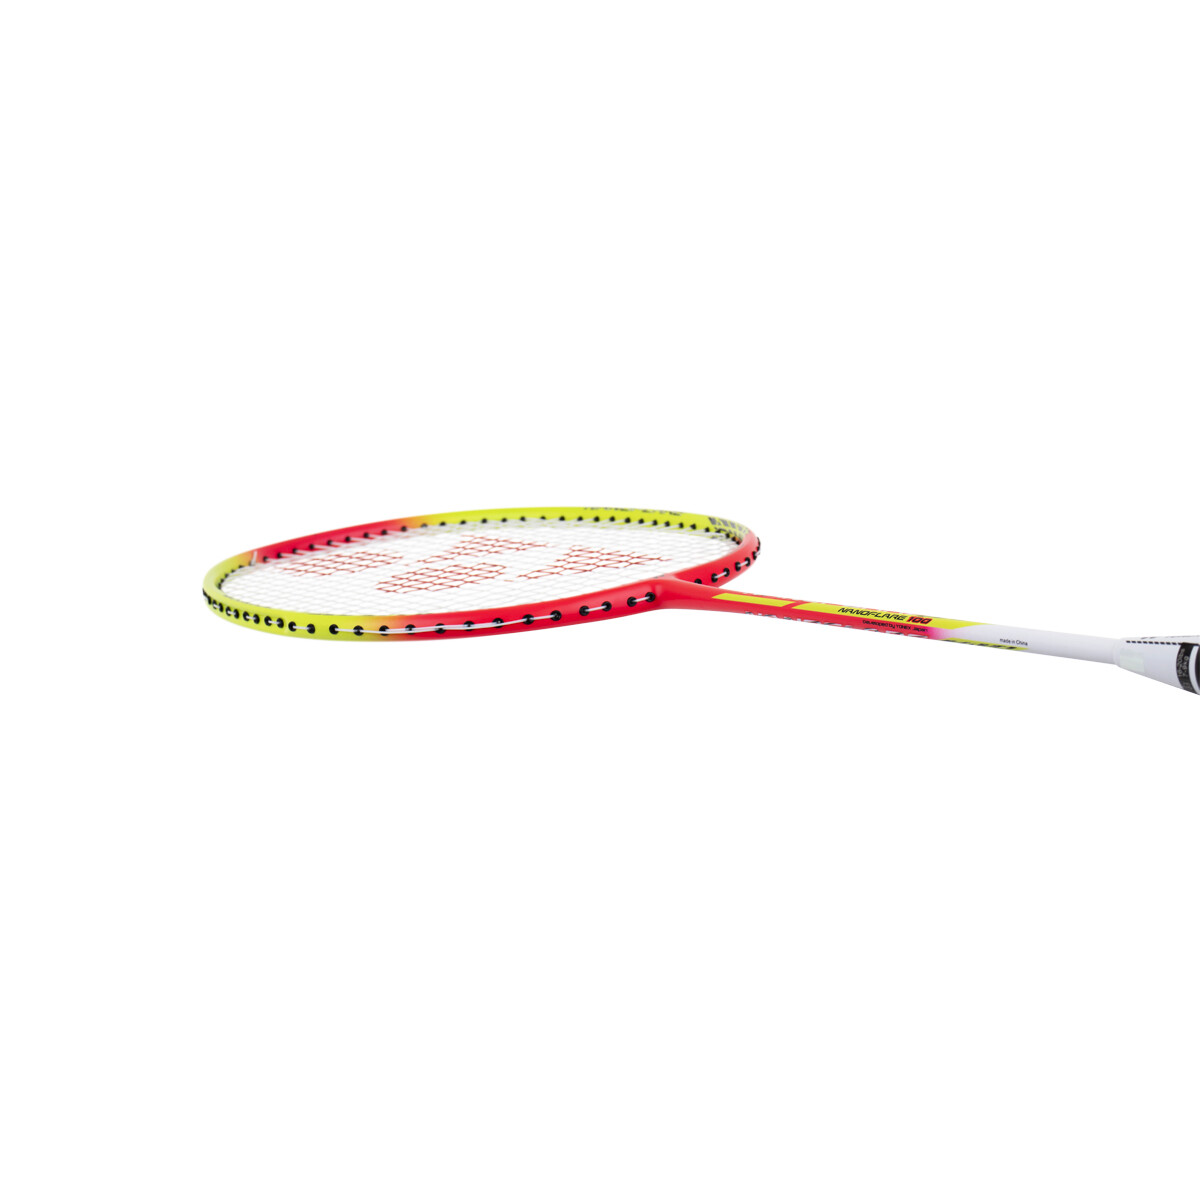 Badmintonschläger Yonex Nanoflare 100 Pink/Yellow